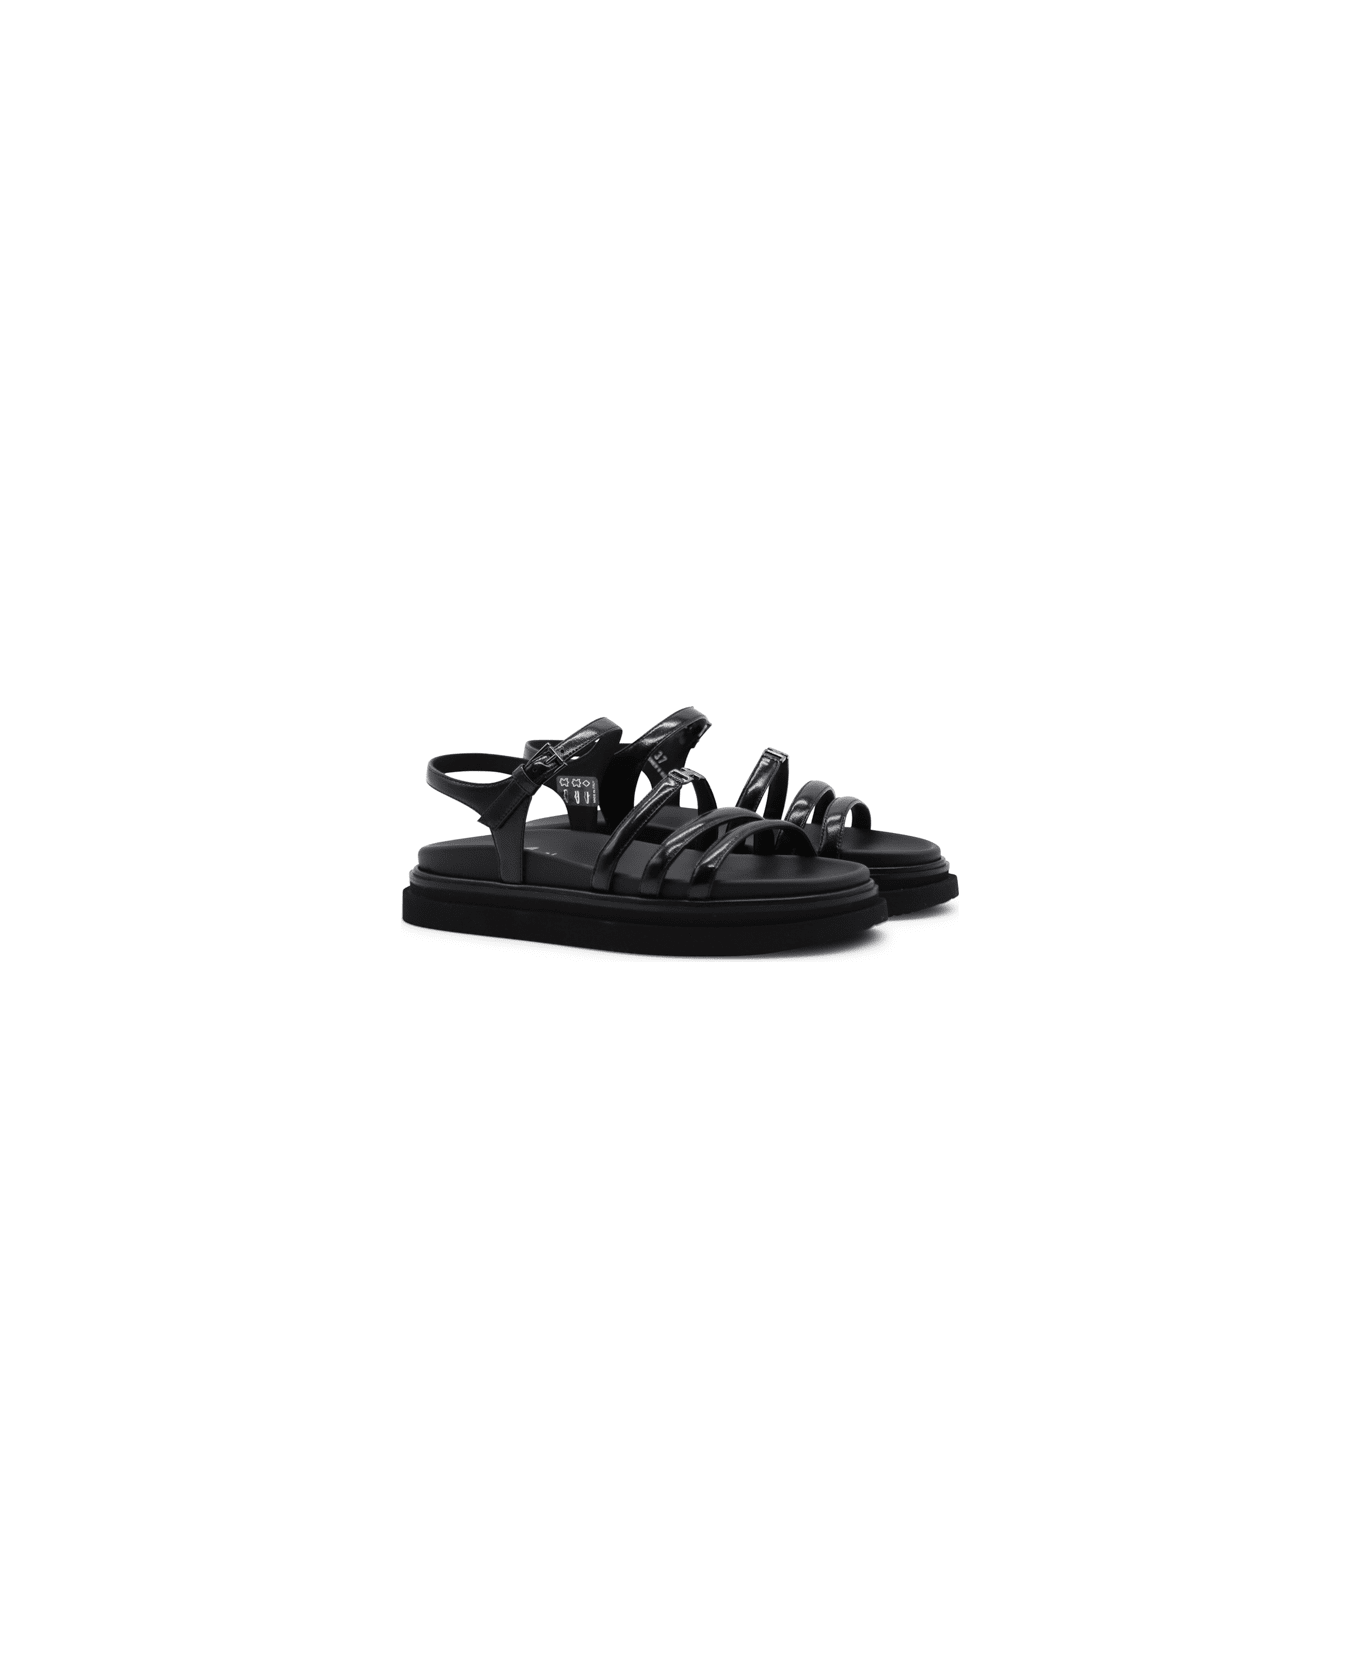 Hogan Patent Leather Sandals - Black サンダル